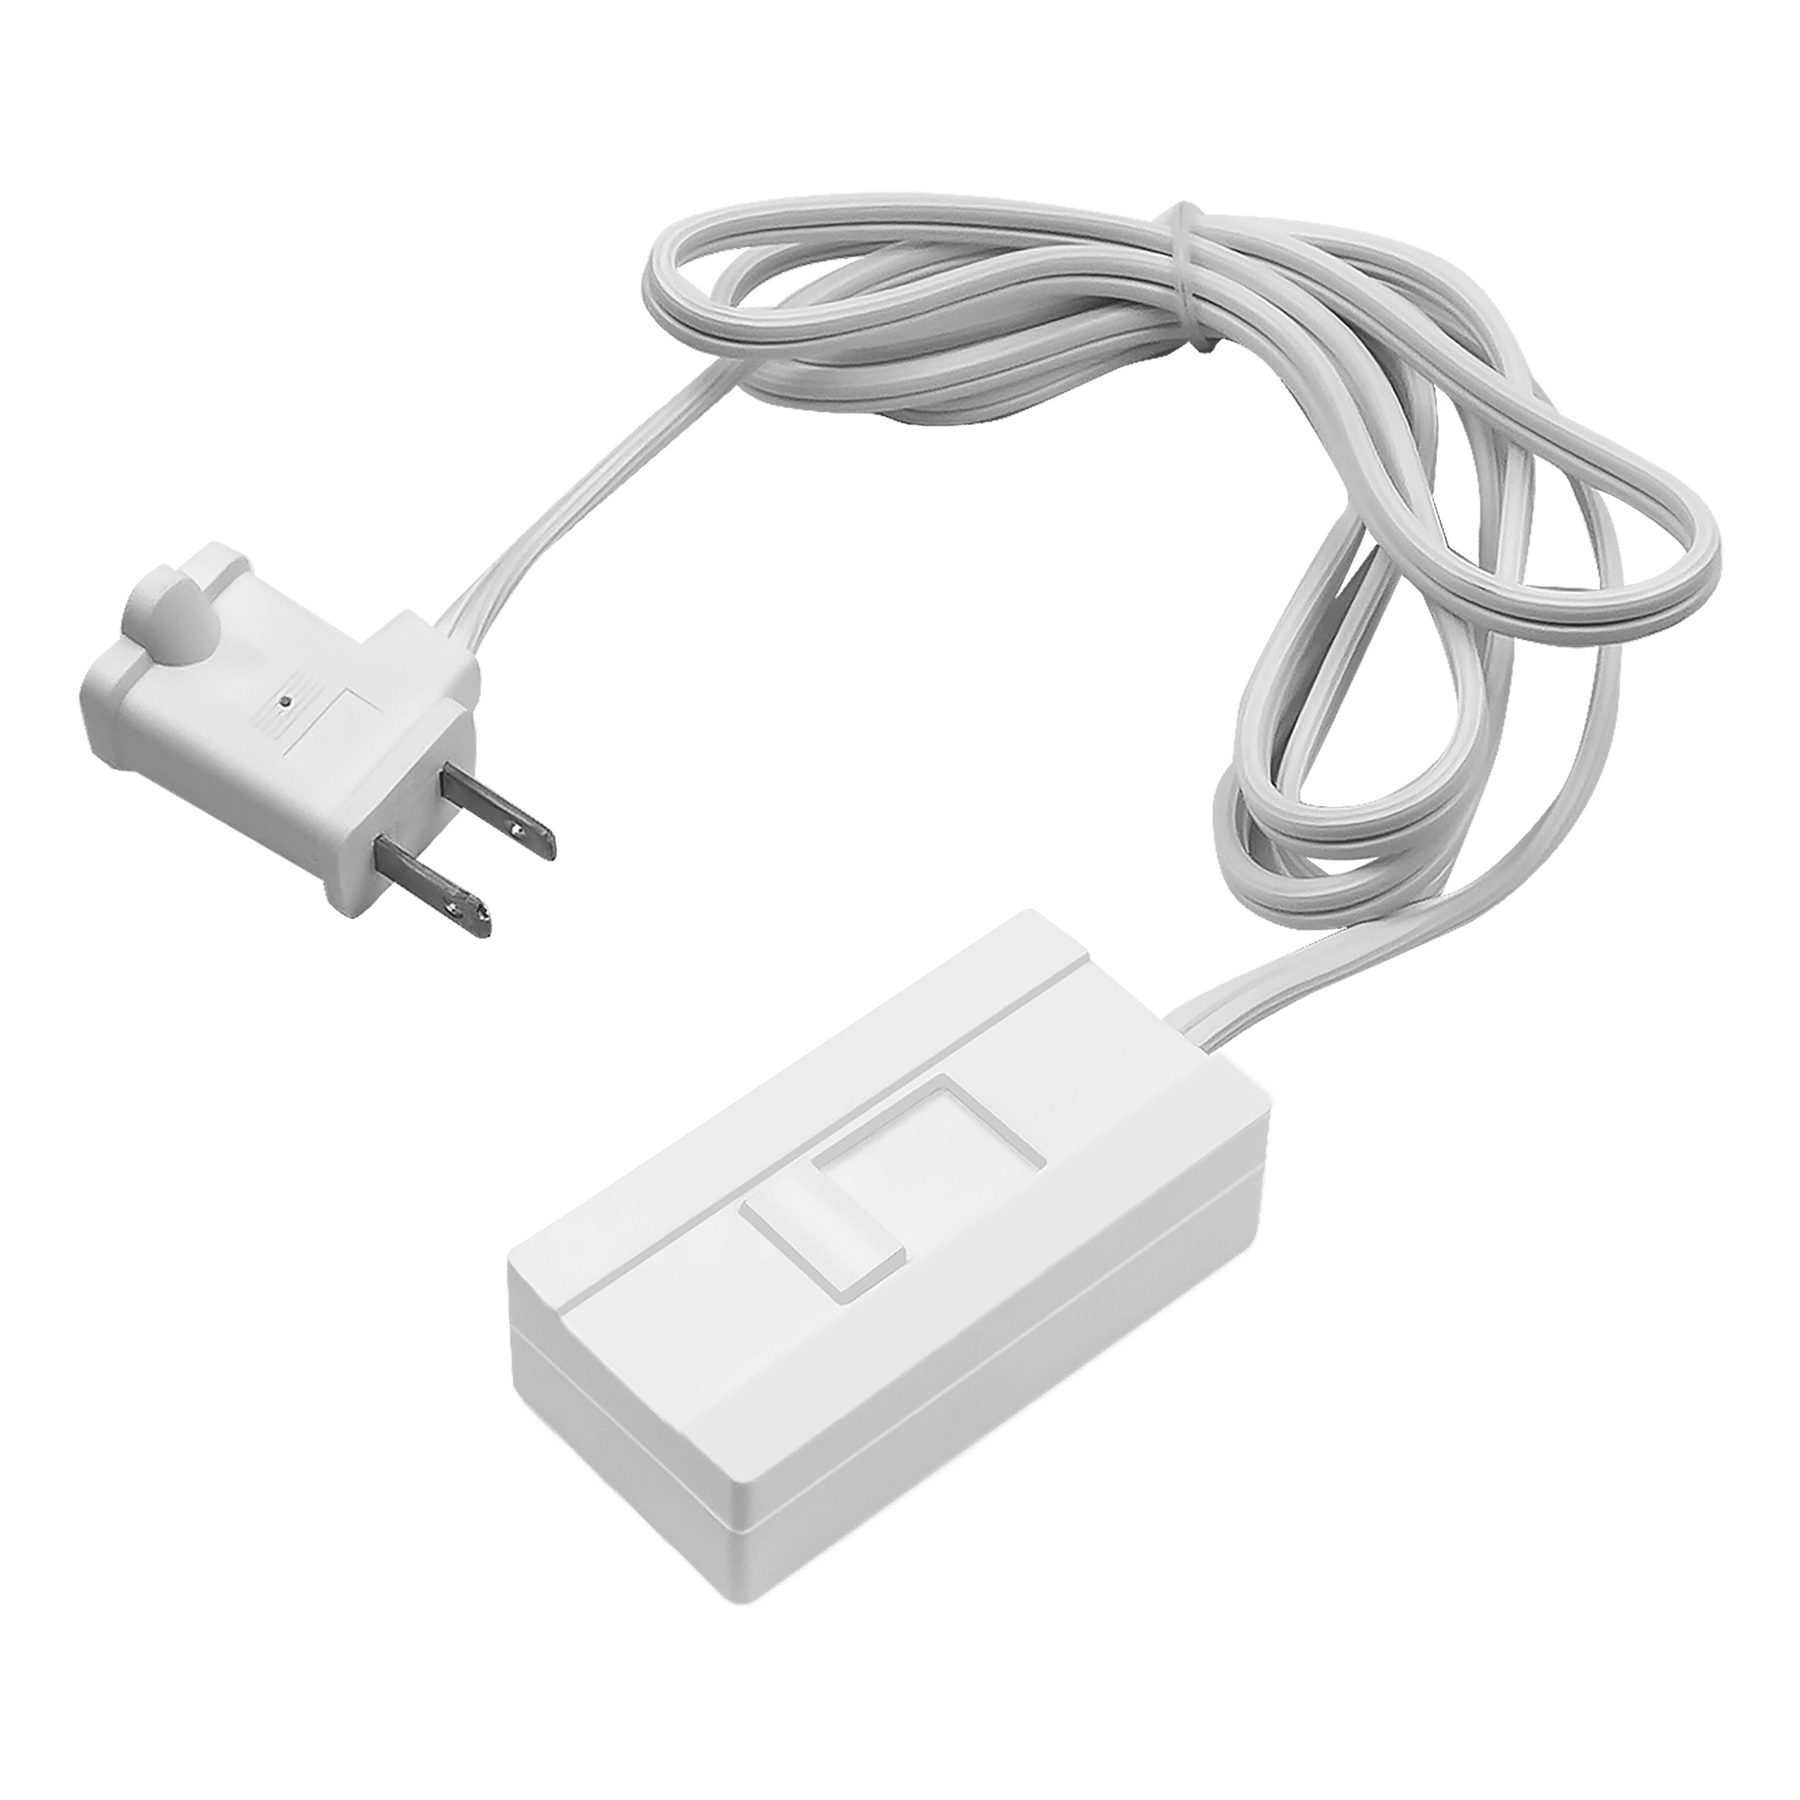 Plug-In Tabletop Lamp Dimmer, LED/Inc/Hal